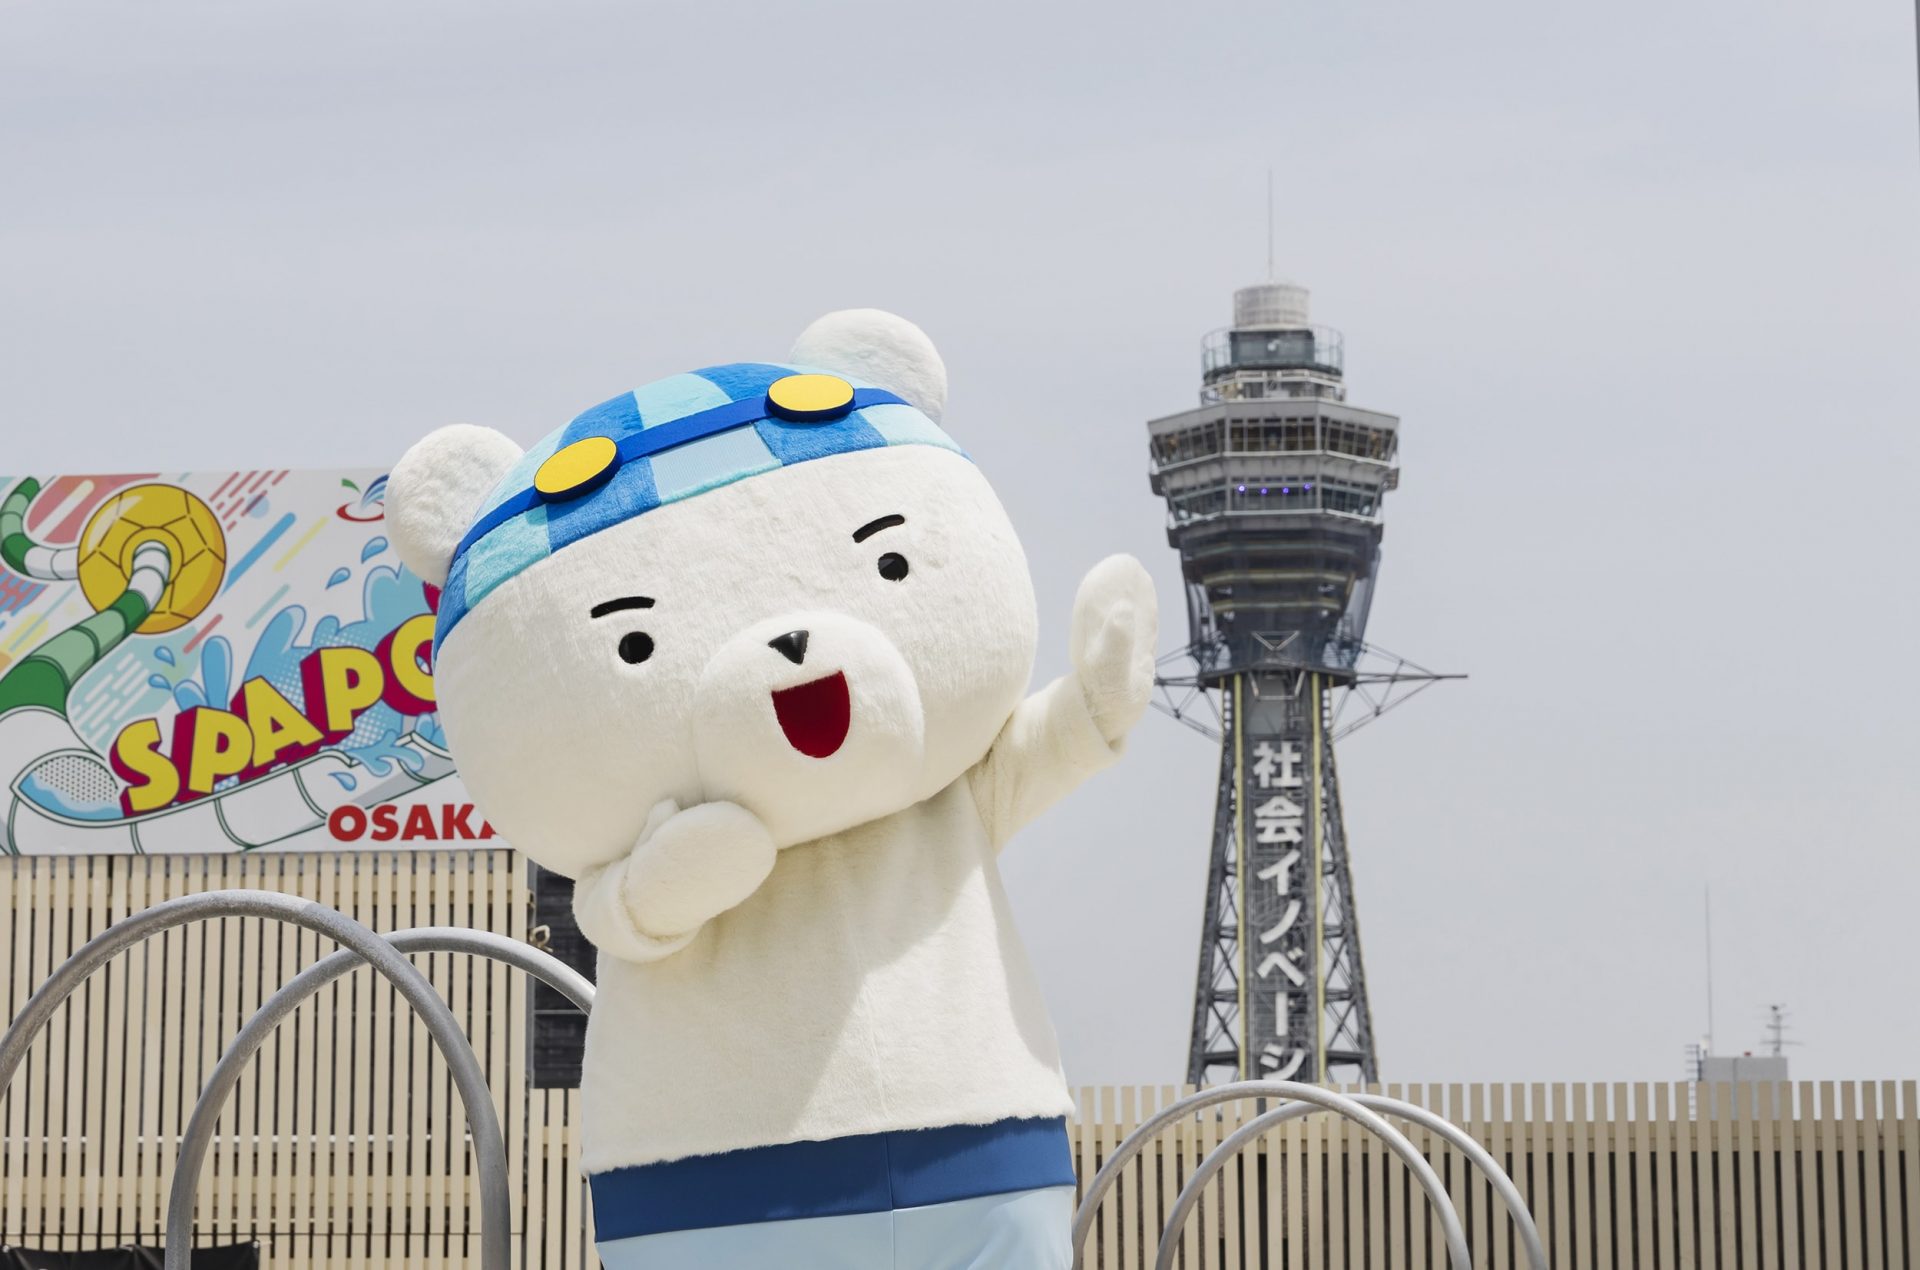 Osaka Trump! “Local Playing Card Series” produced by “Yasuko Sensyu” Appears in Spa World! !